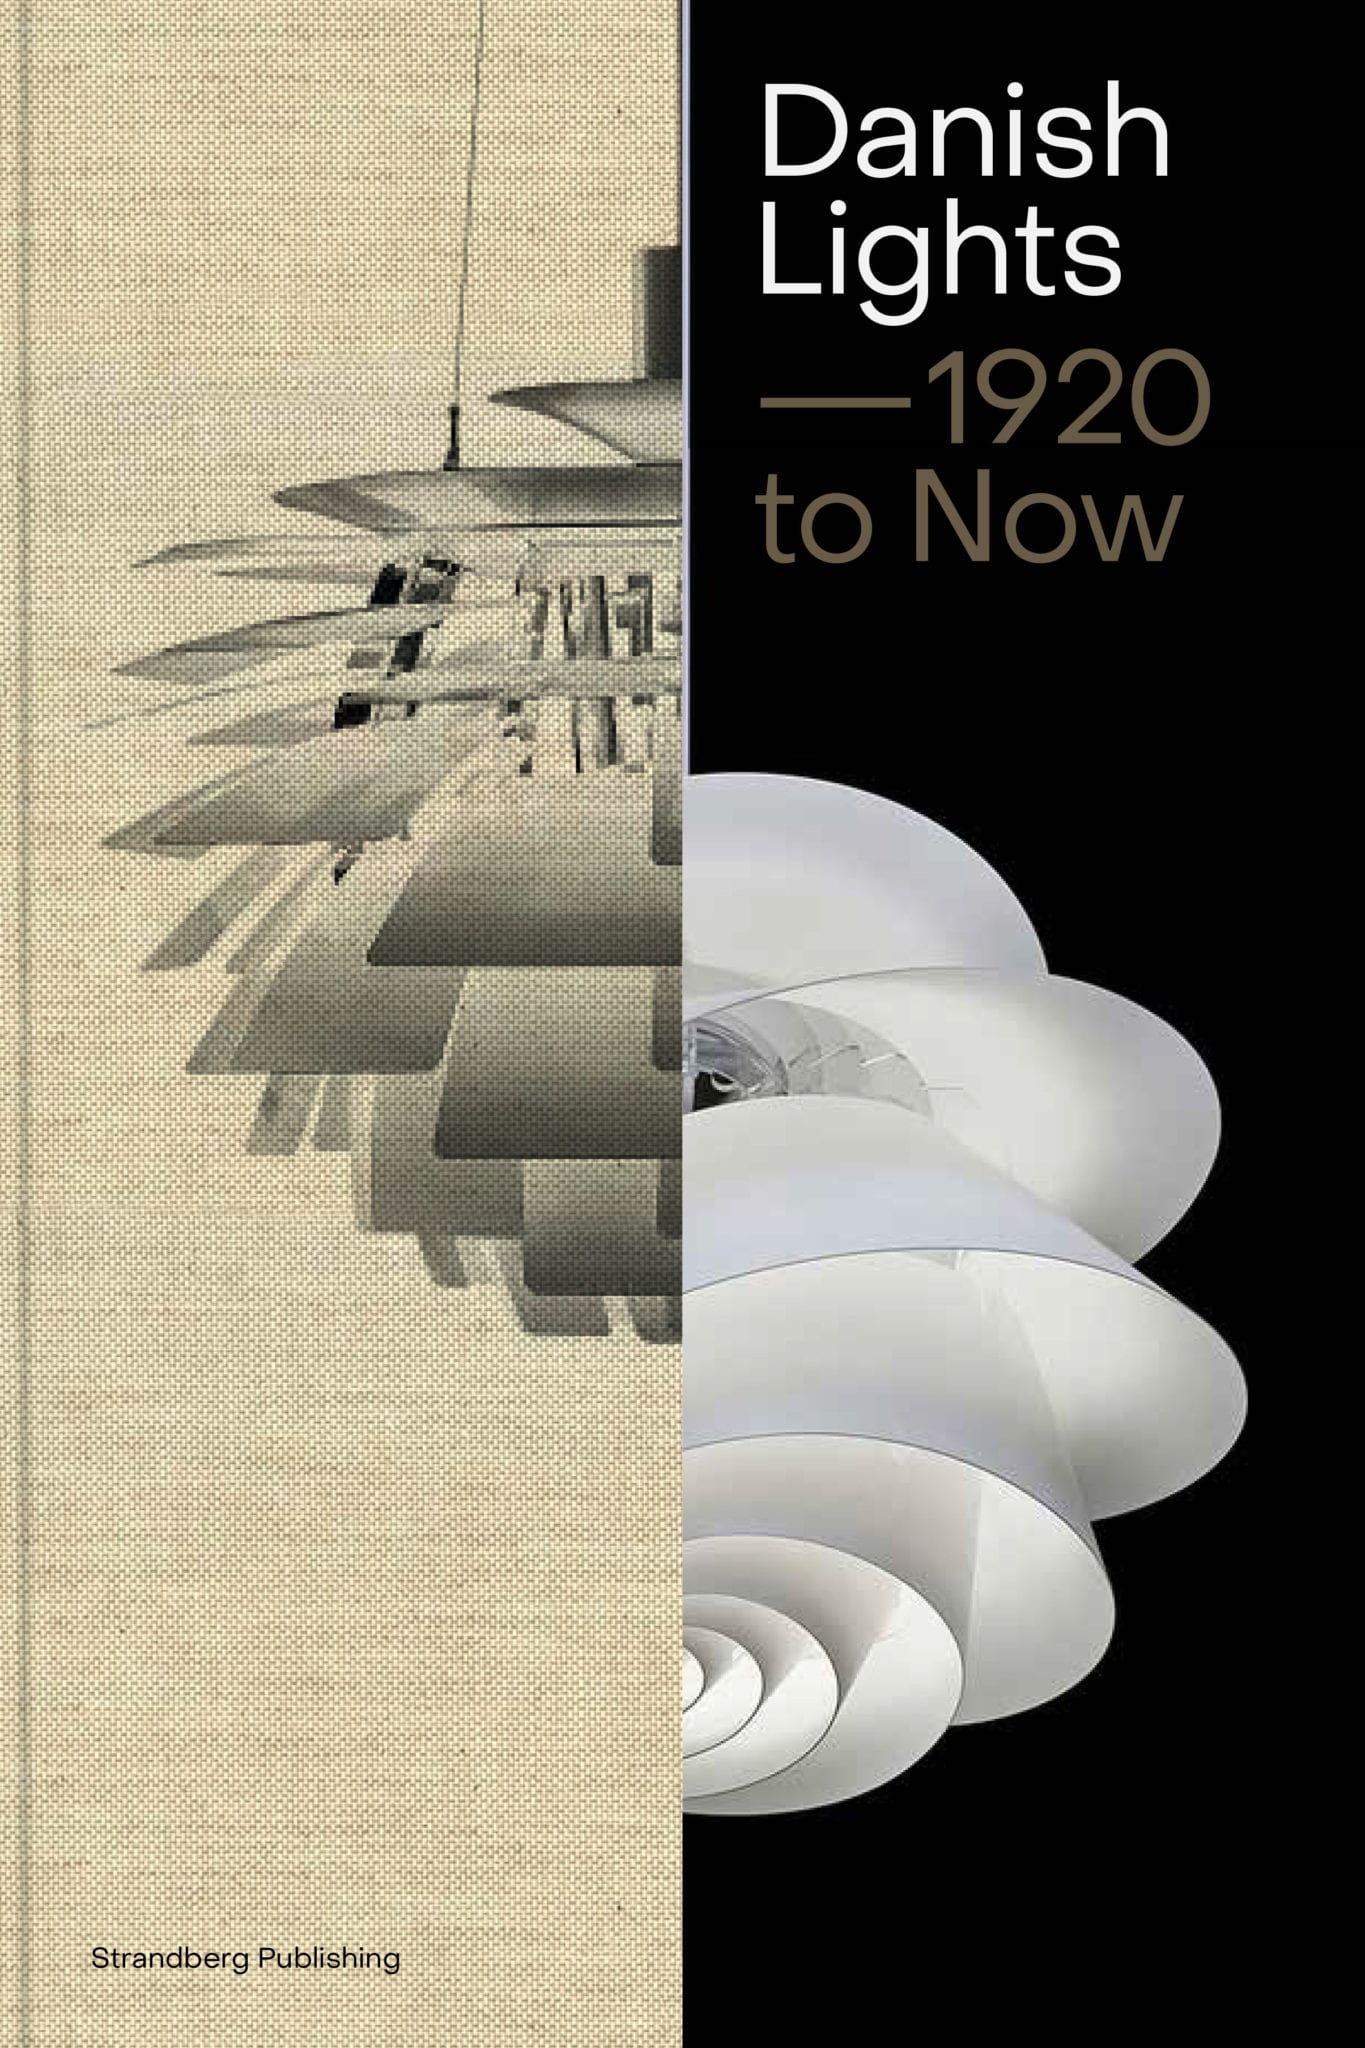 Danish Lights – 1920 to Now Book